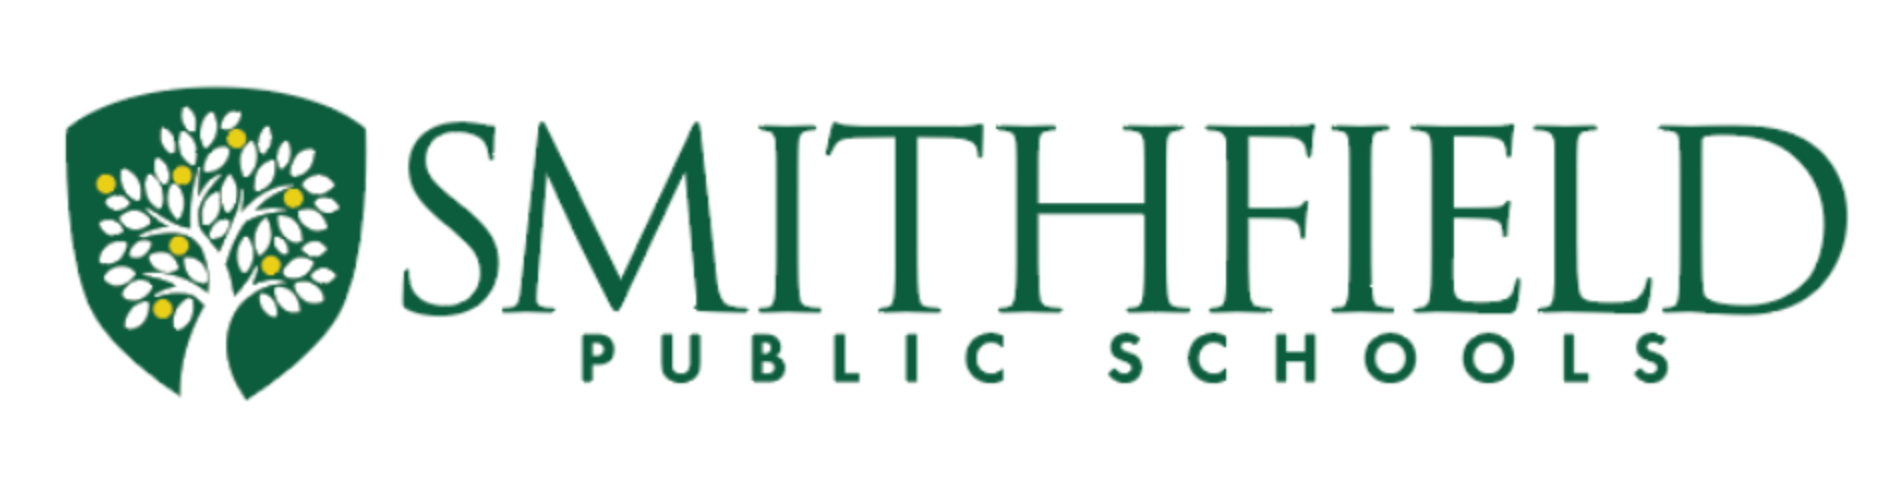 Smithfield Public Schools logo